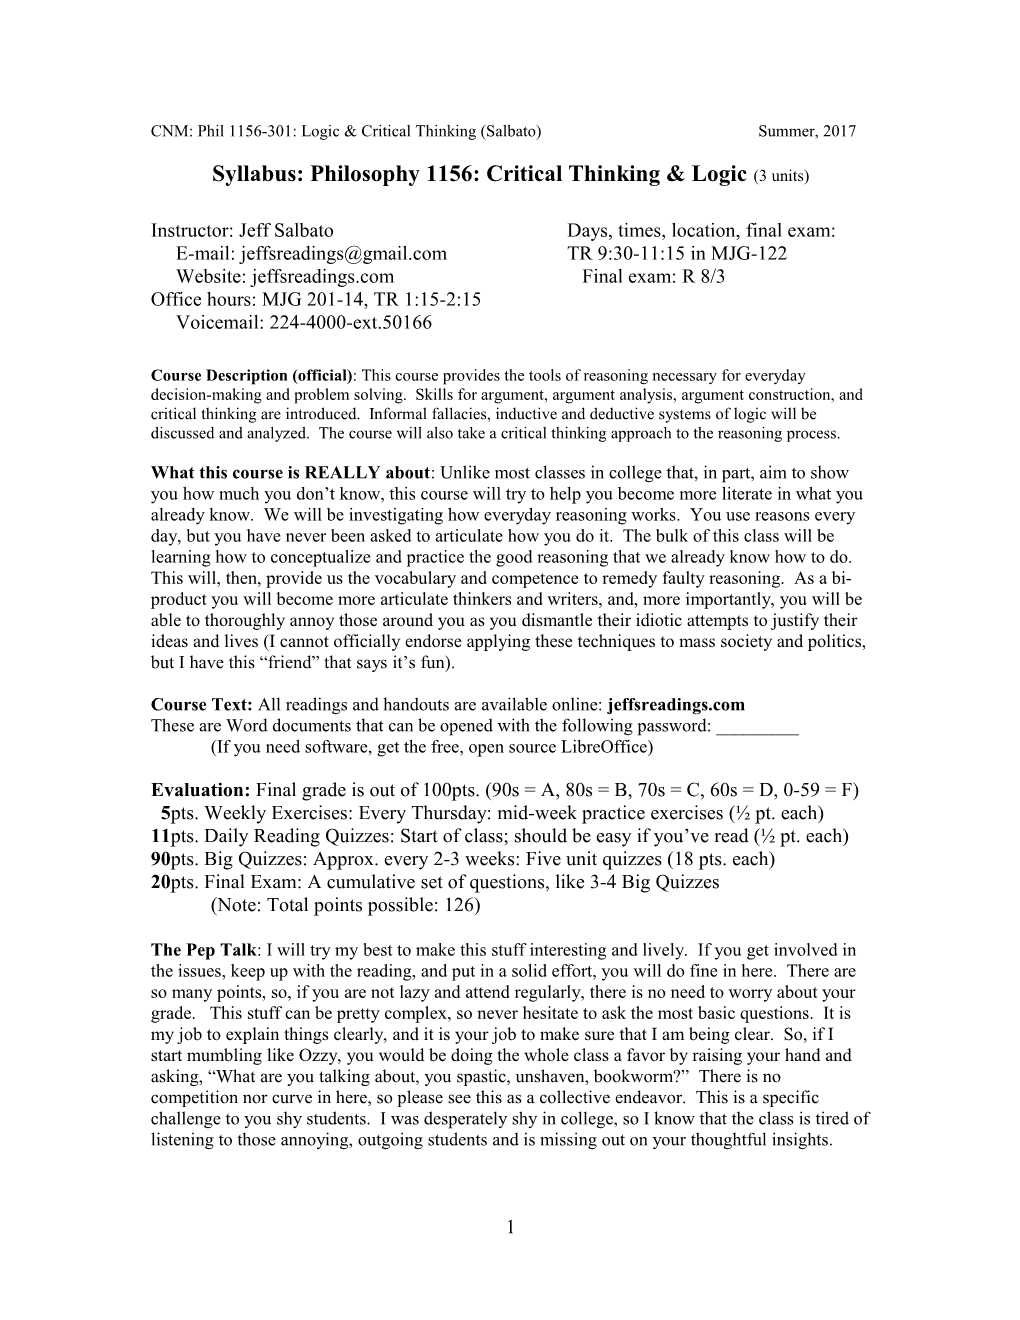 VVC: Phil 207: Critical Thinking (Salbato-0866) Fall, 2003